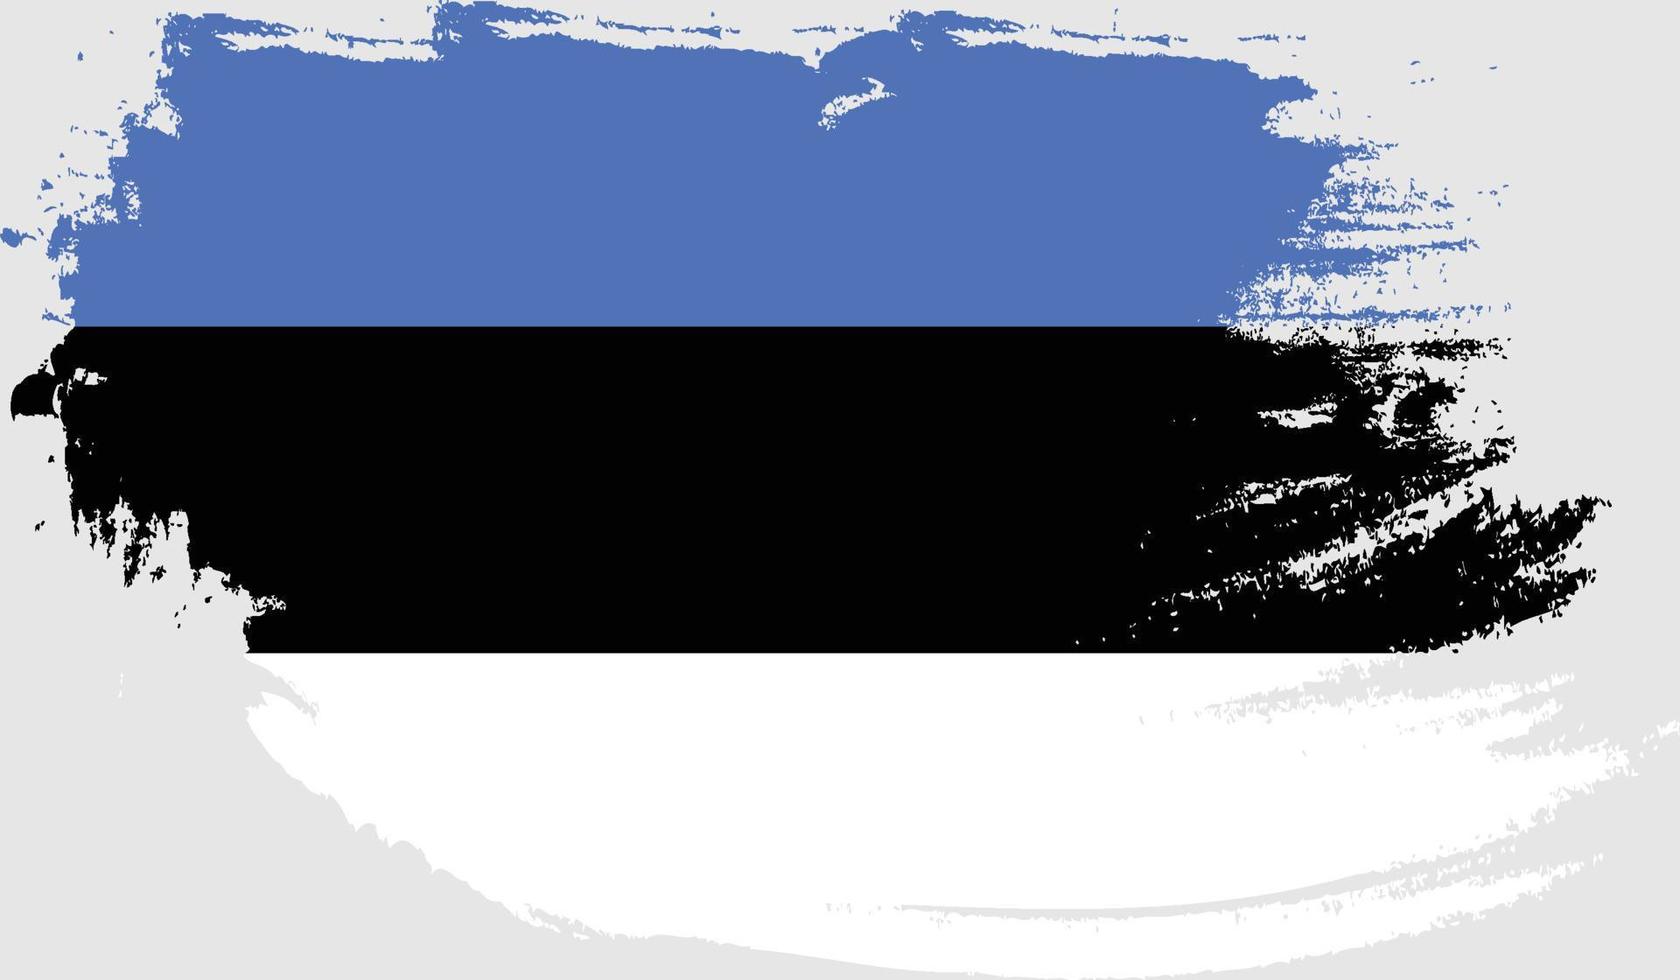 Estonia flag with grunge texture vector